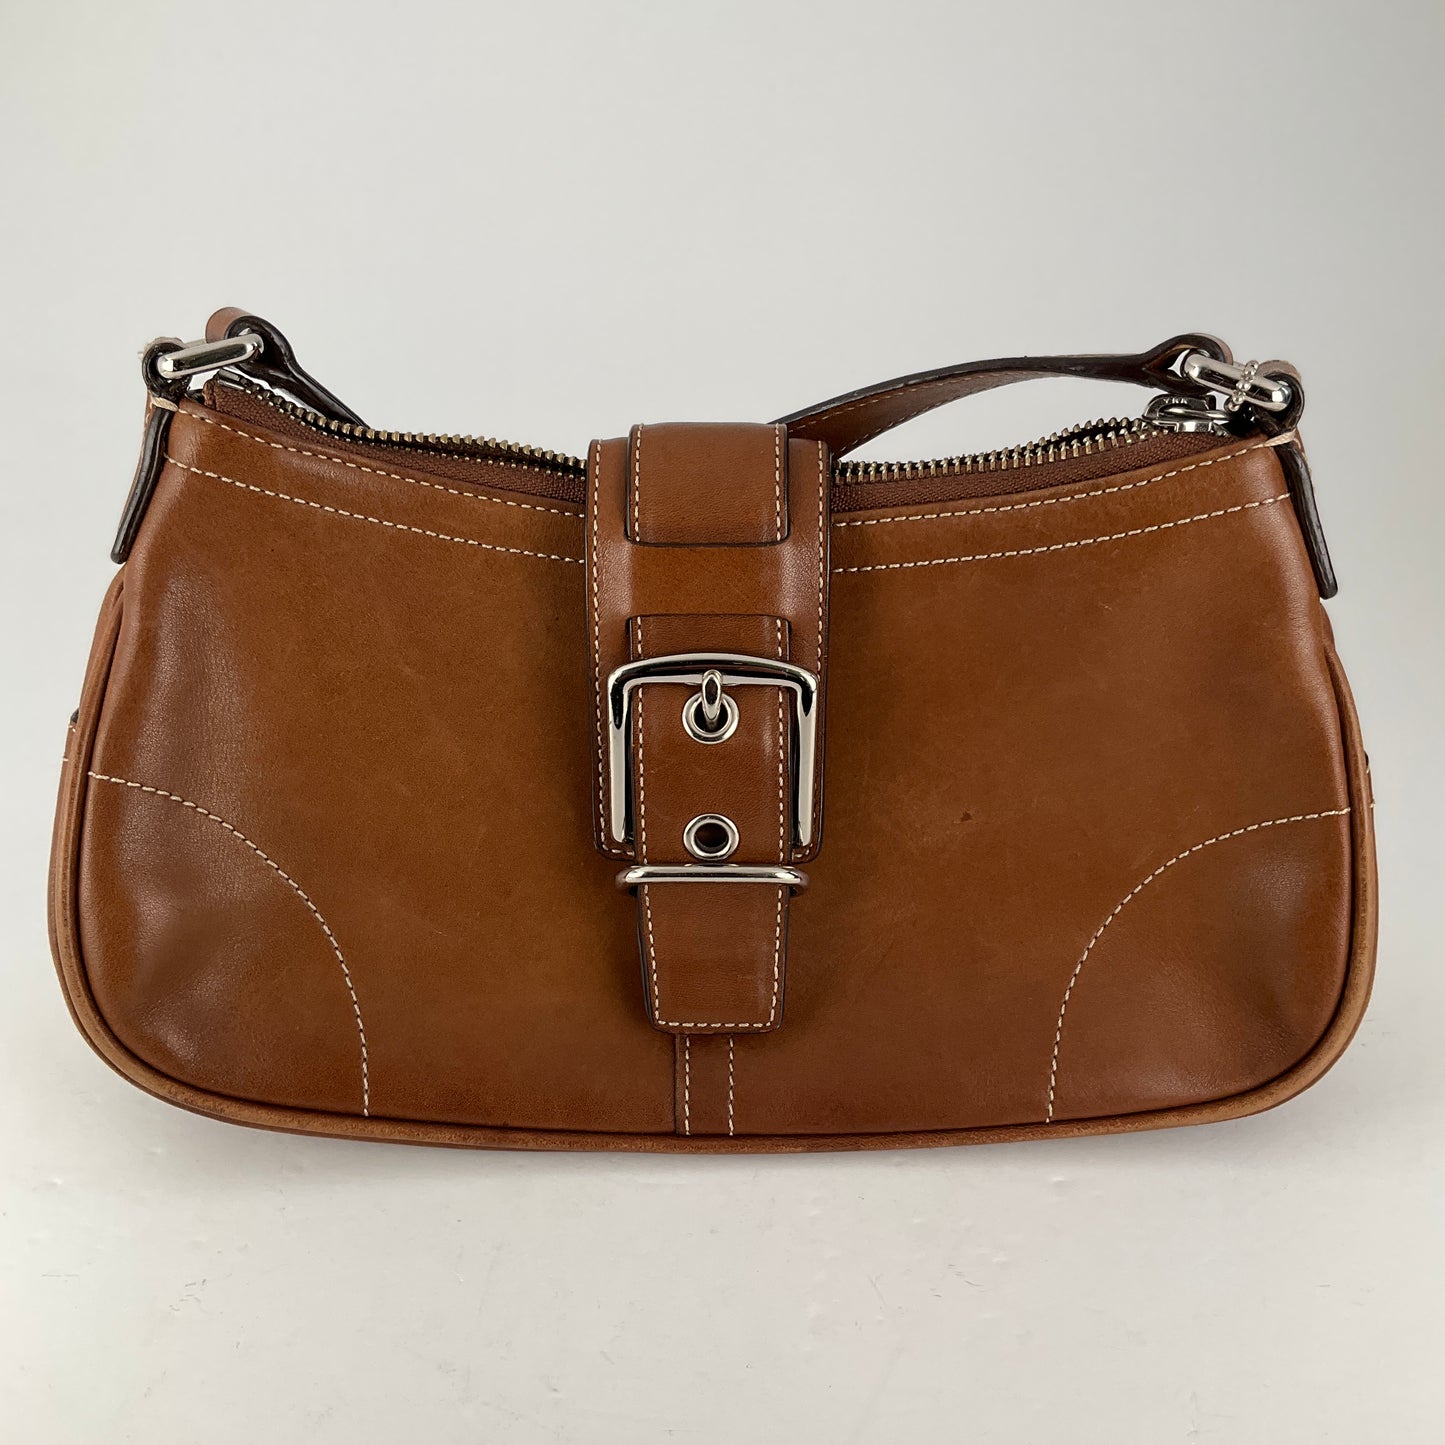 Coach - Small Handbag